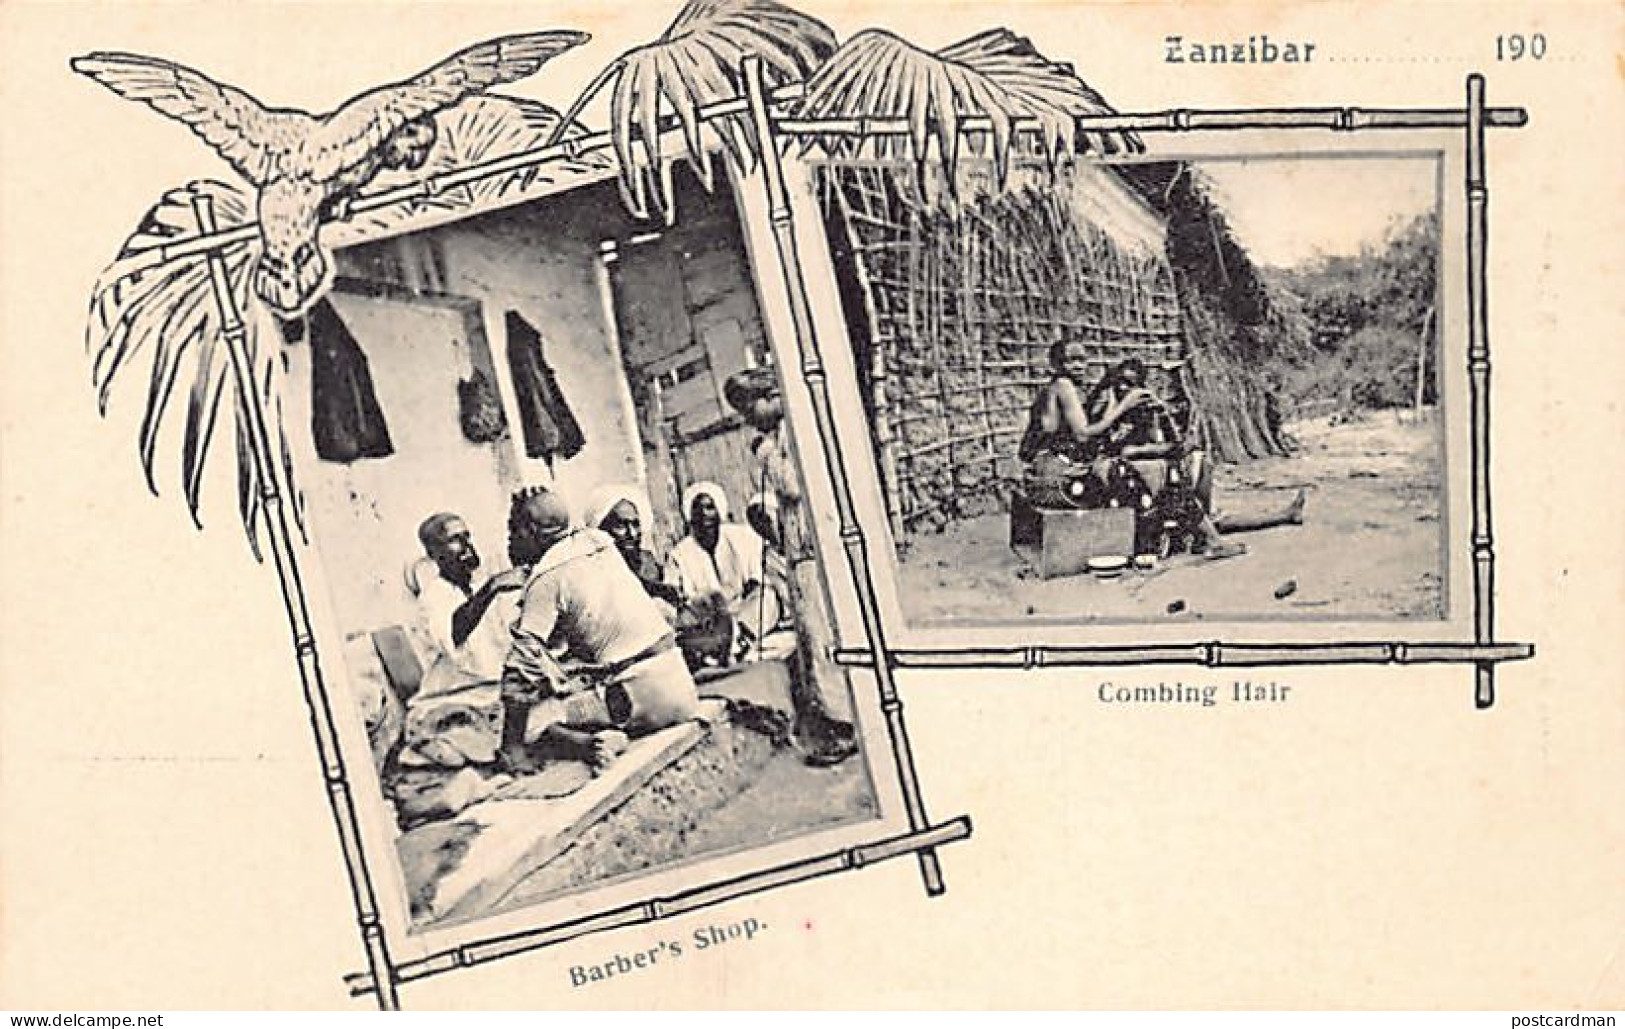 Tanzania - ZANZIBAR - Barber's Shop - Combing Hair - Publ. Pereira De Lord Brothers 25 - Tanzanie